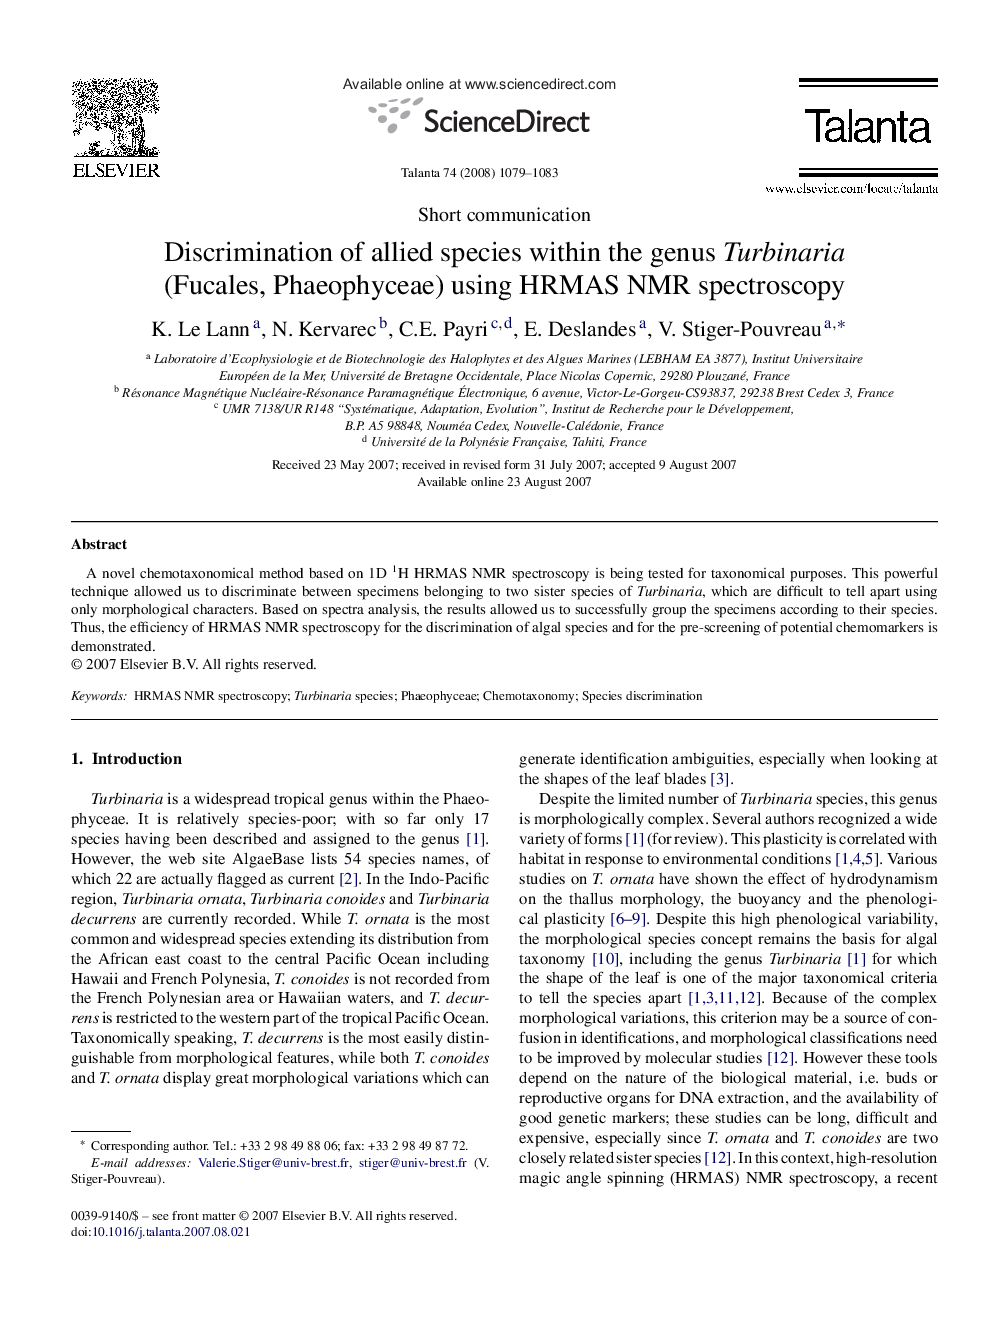 Discrimination of allied species within the genus Turbinaria (Fucales, Phaeophyceae) using HRMAS NMR spectroscopy